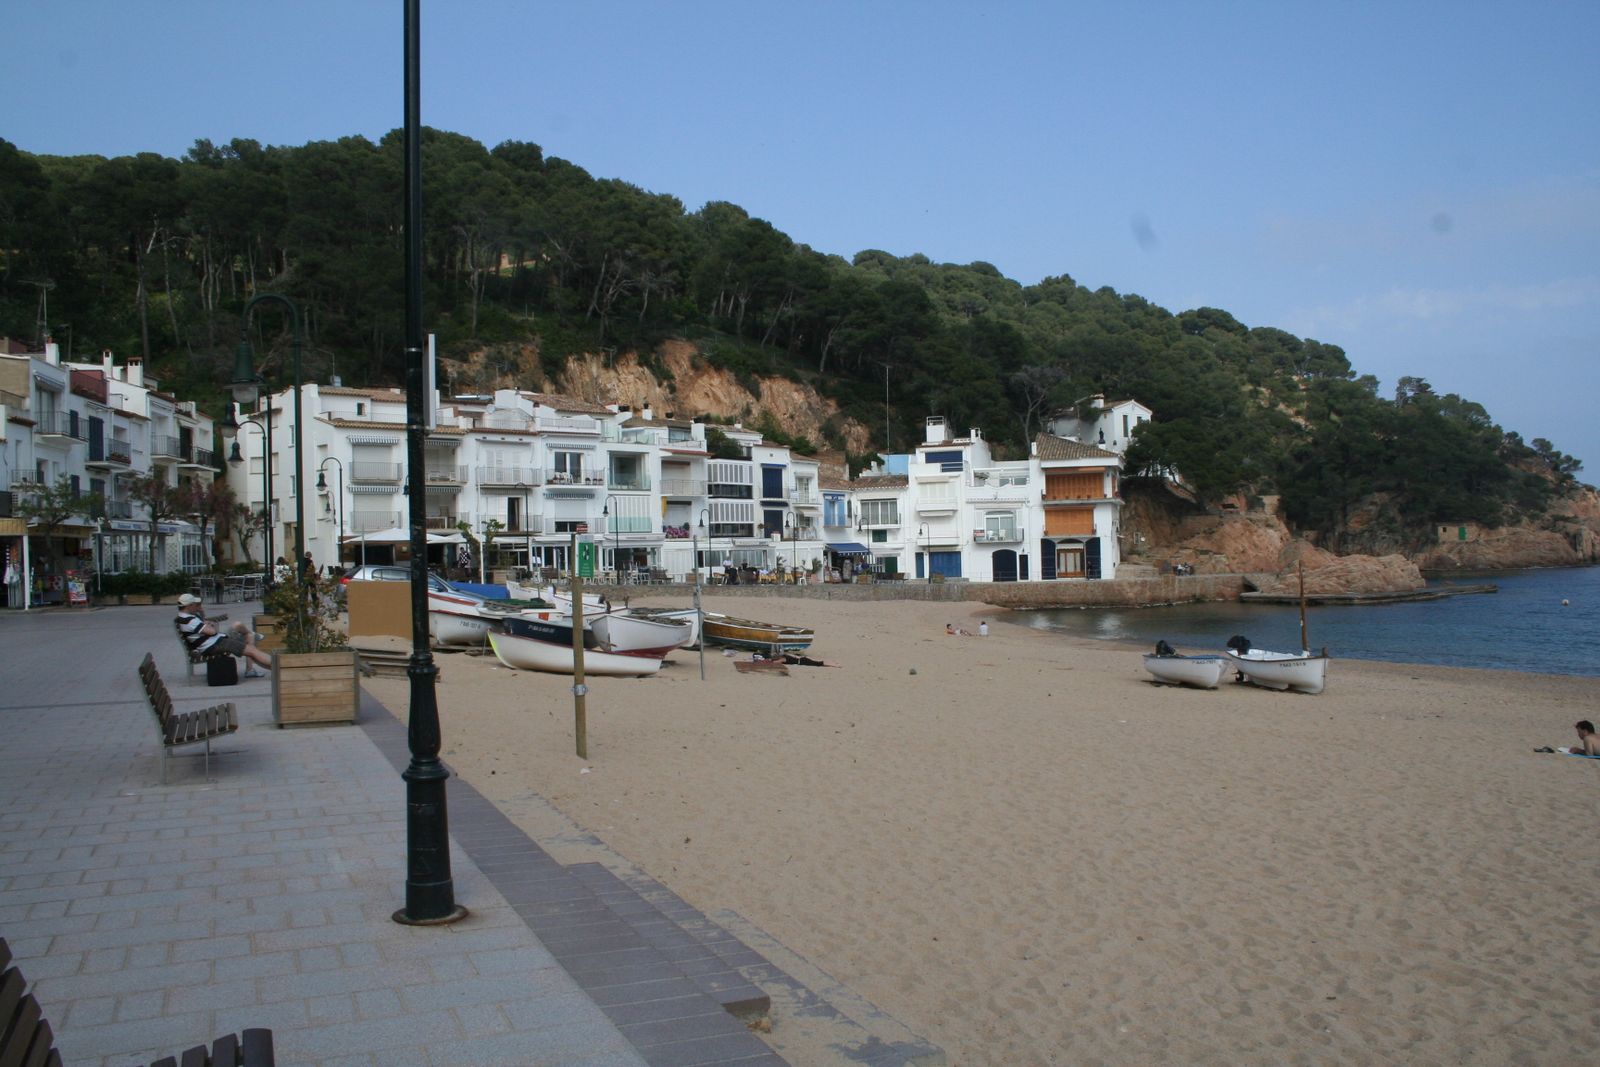 The Catalonian coastal village of Tamariu